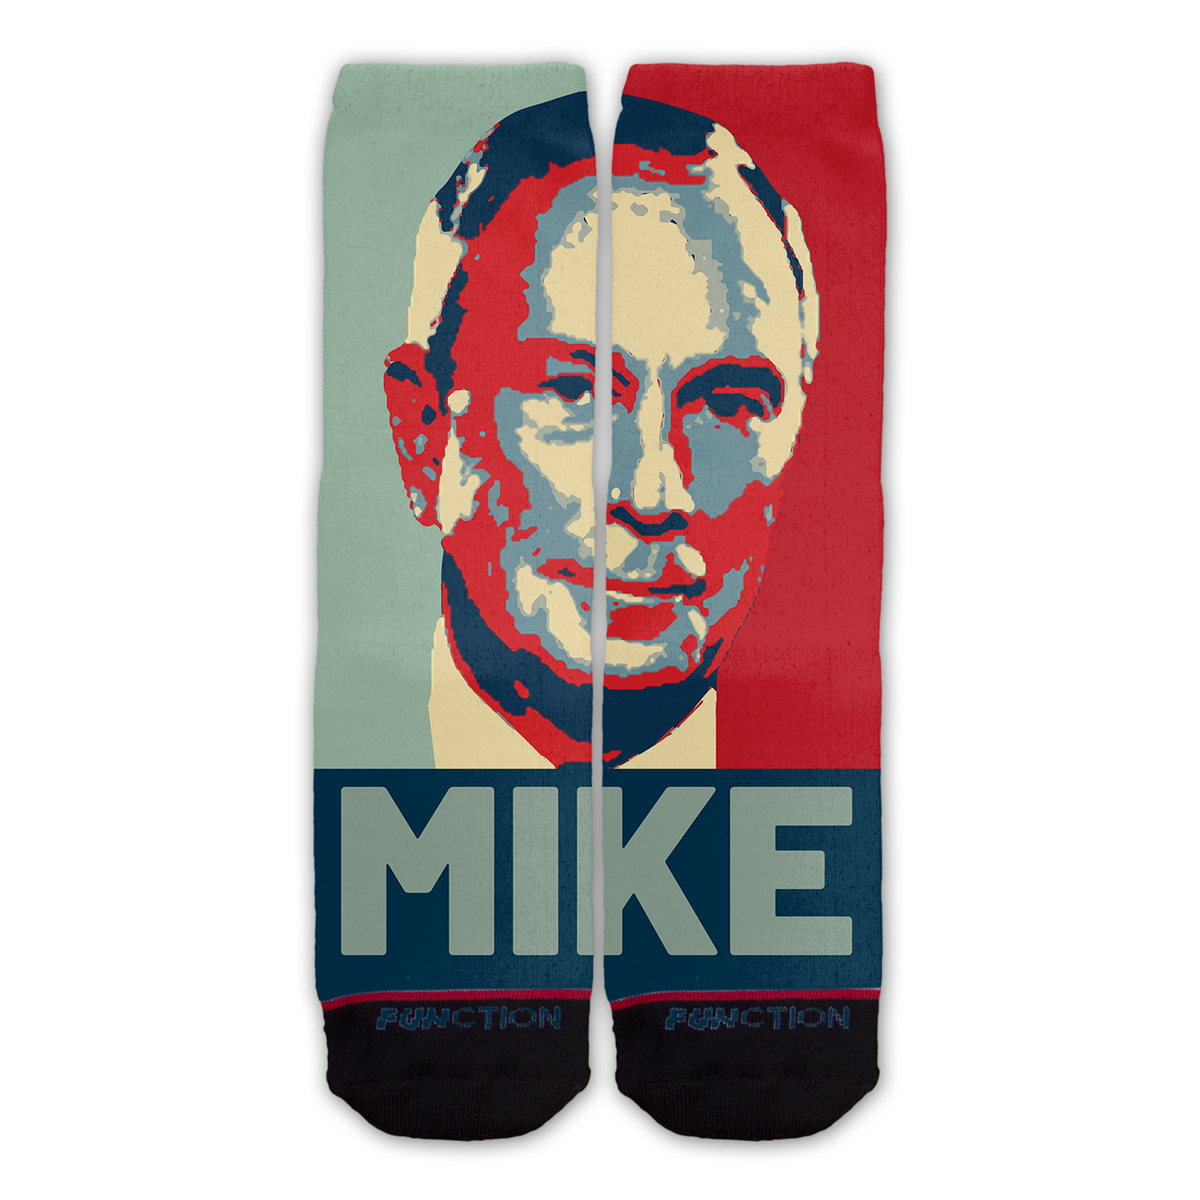 Bloomberg.com  Crazy socks, Mens socks, Cool socks